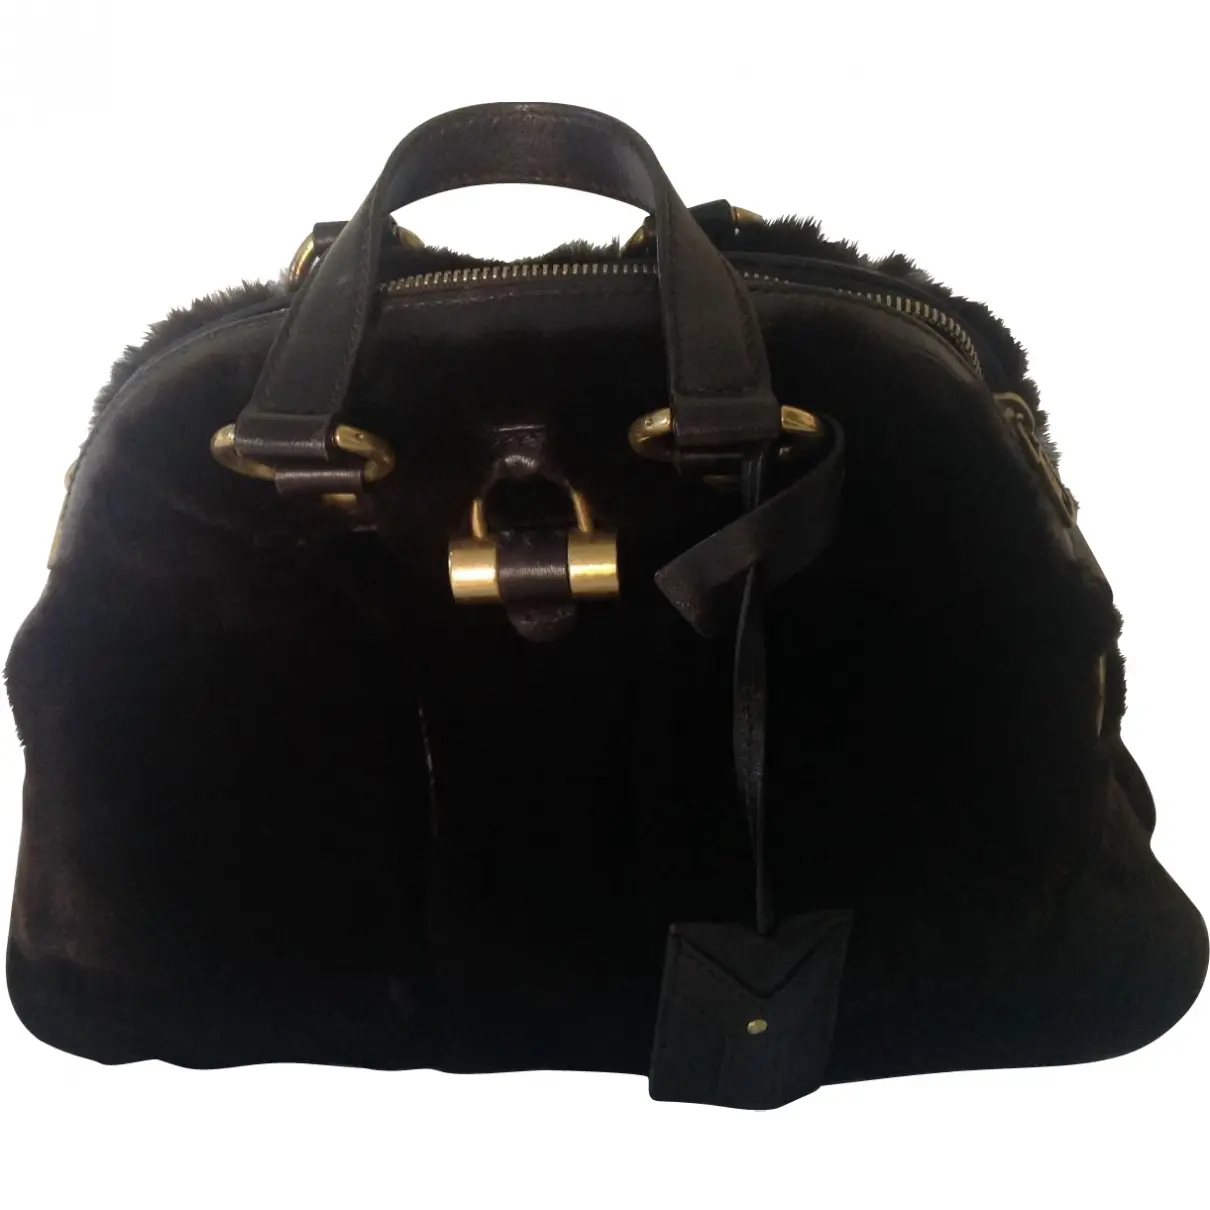 Brown Fur Handbag Muse Yves Saint Laurent